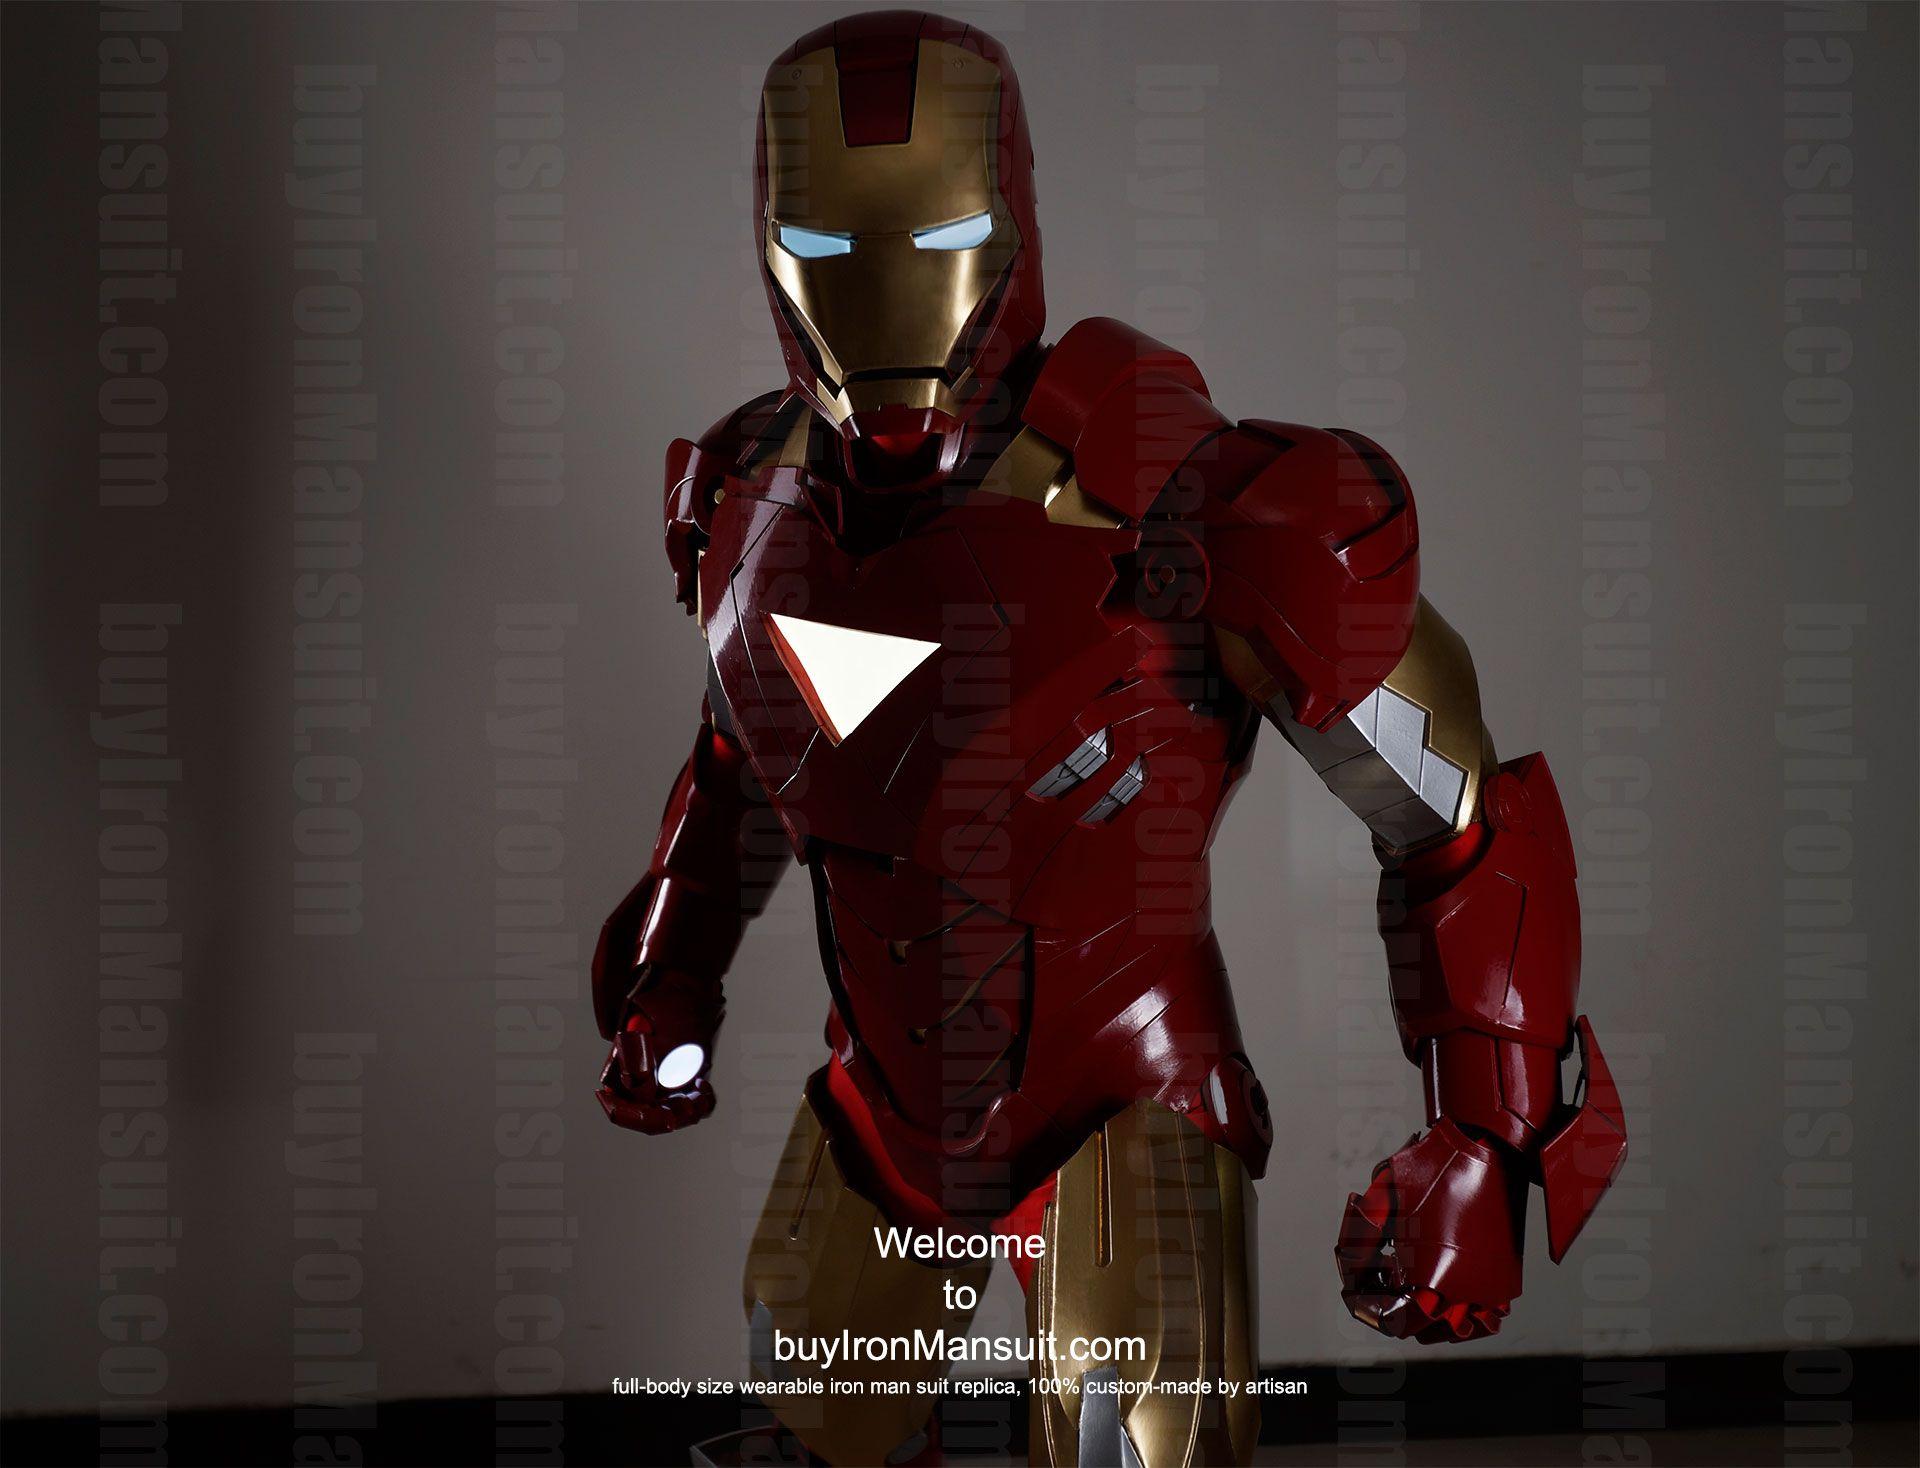 Buy Iron Man suit, Halo Master Chief armor, Batman costume, Star